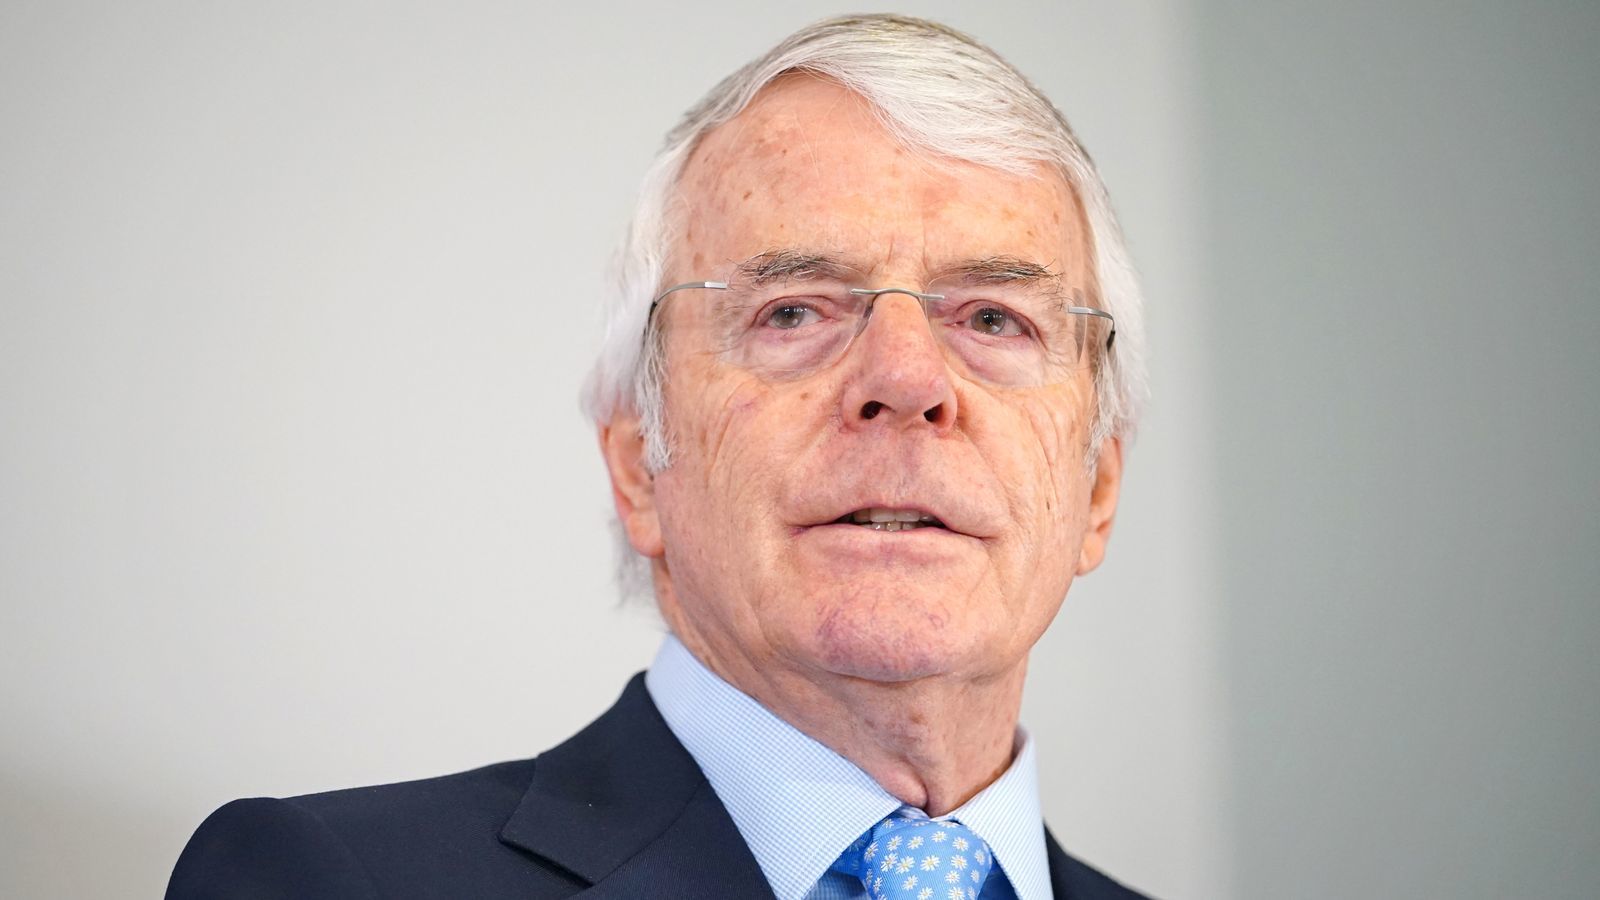 Johnson broke law over No 10 parties, says ex-PM Sir John Major